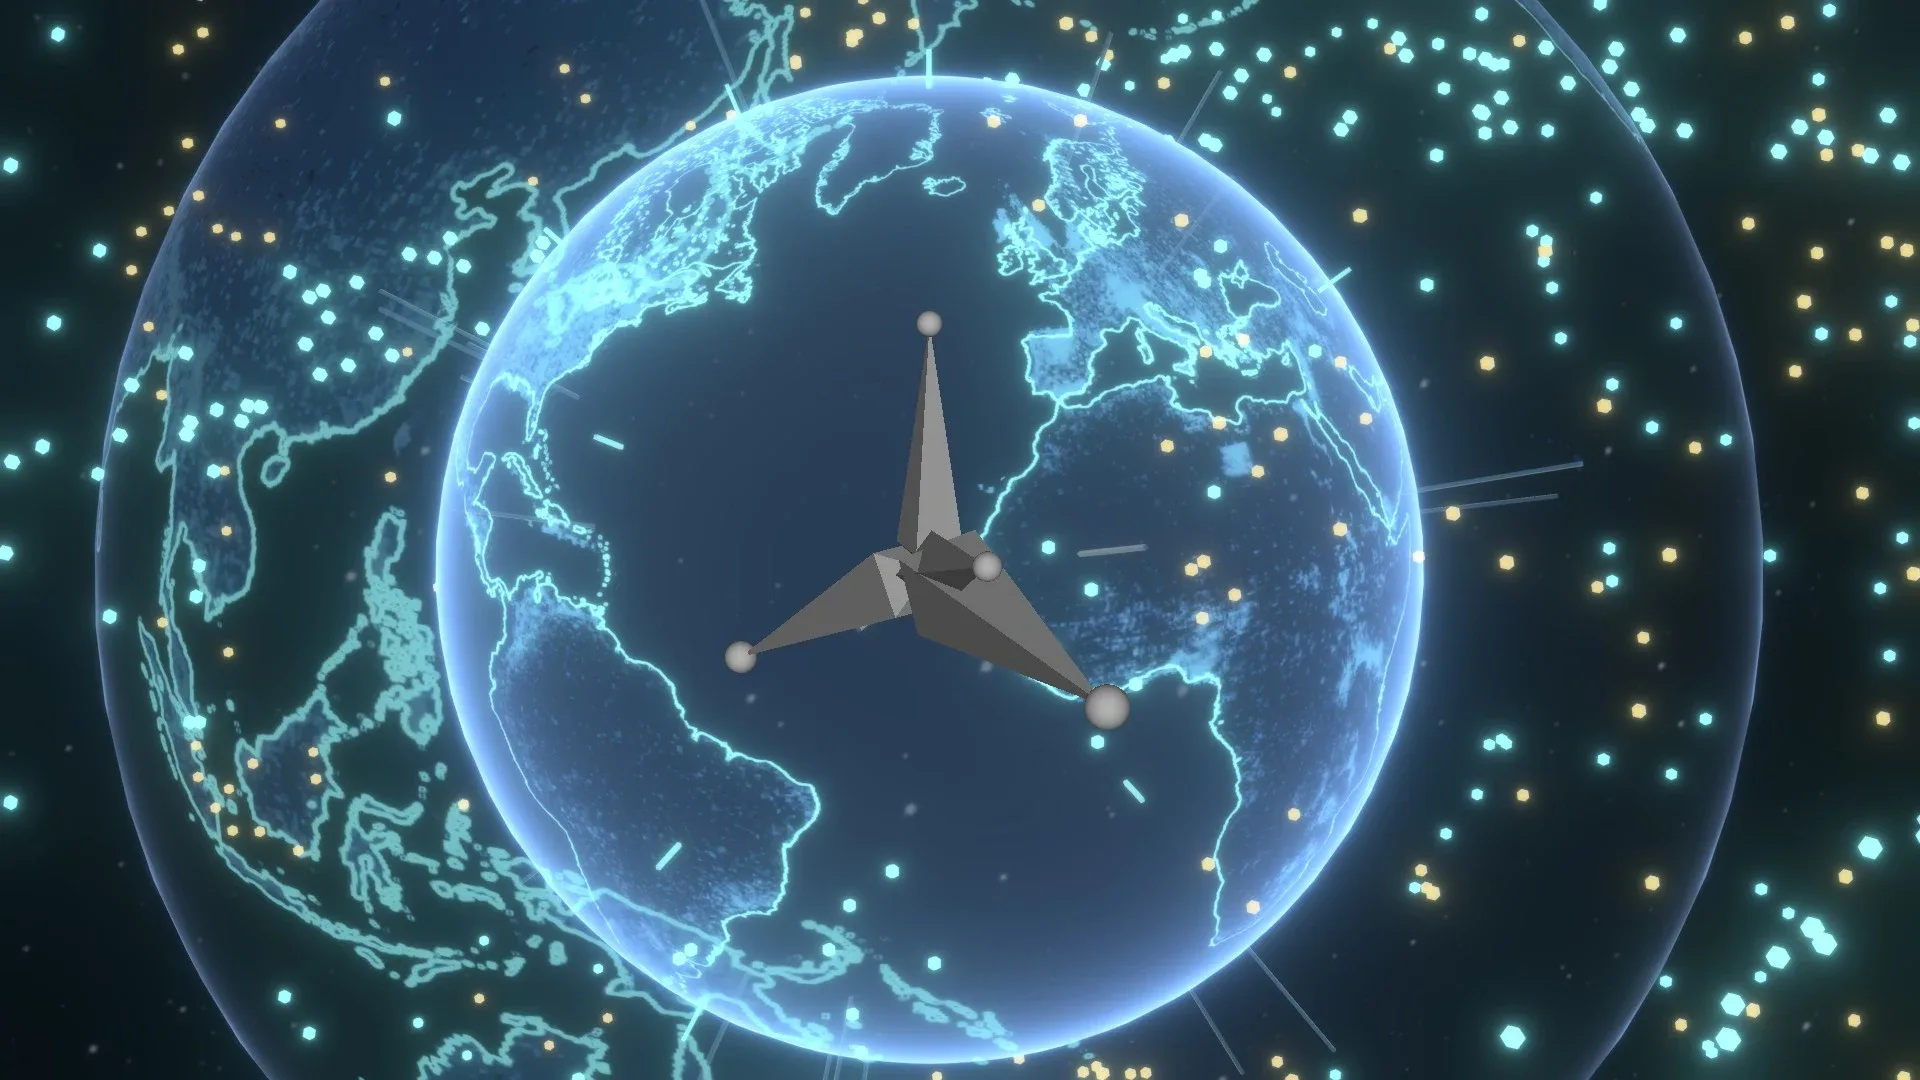 Animated Hologram Planet Earth #6 Sci-Fi 3D Model